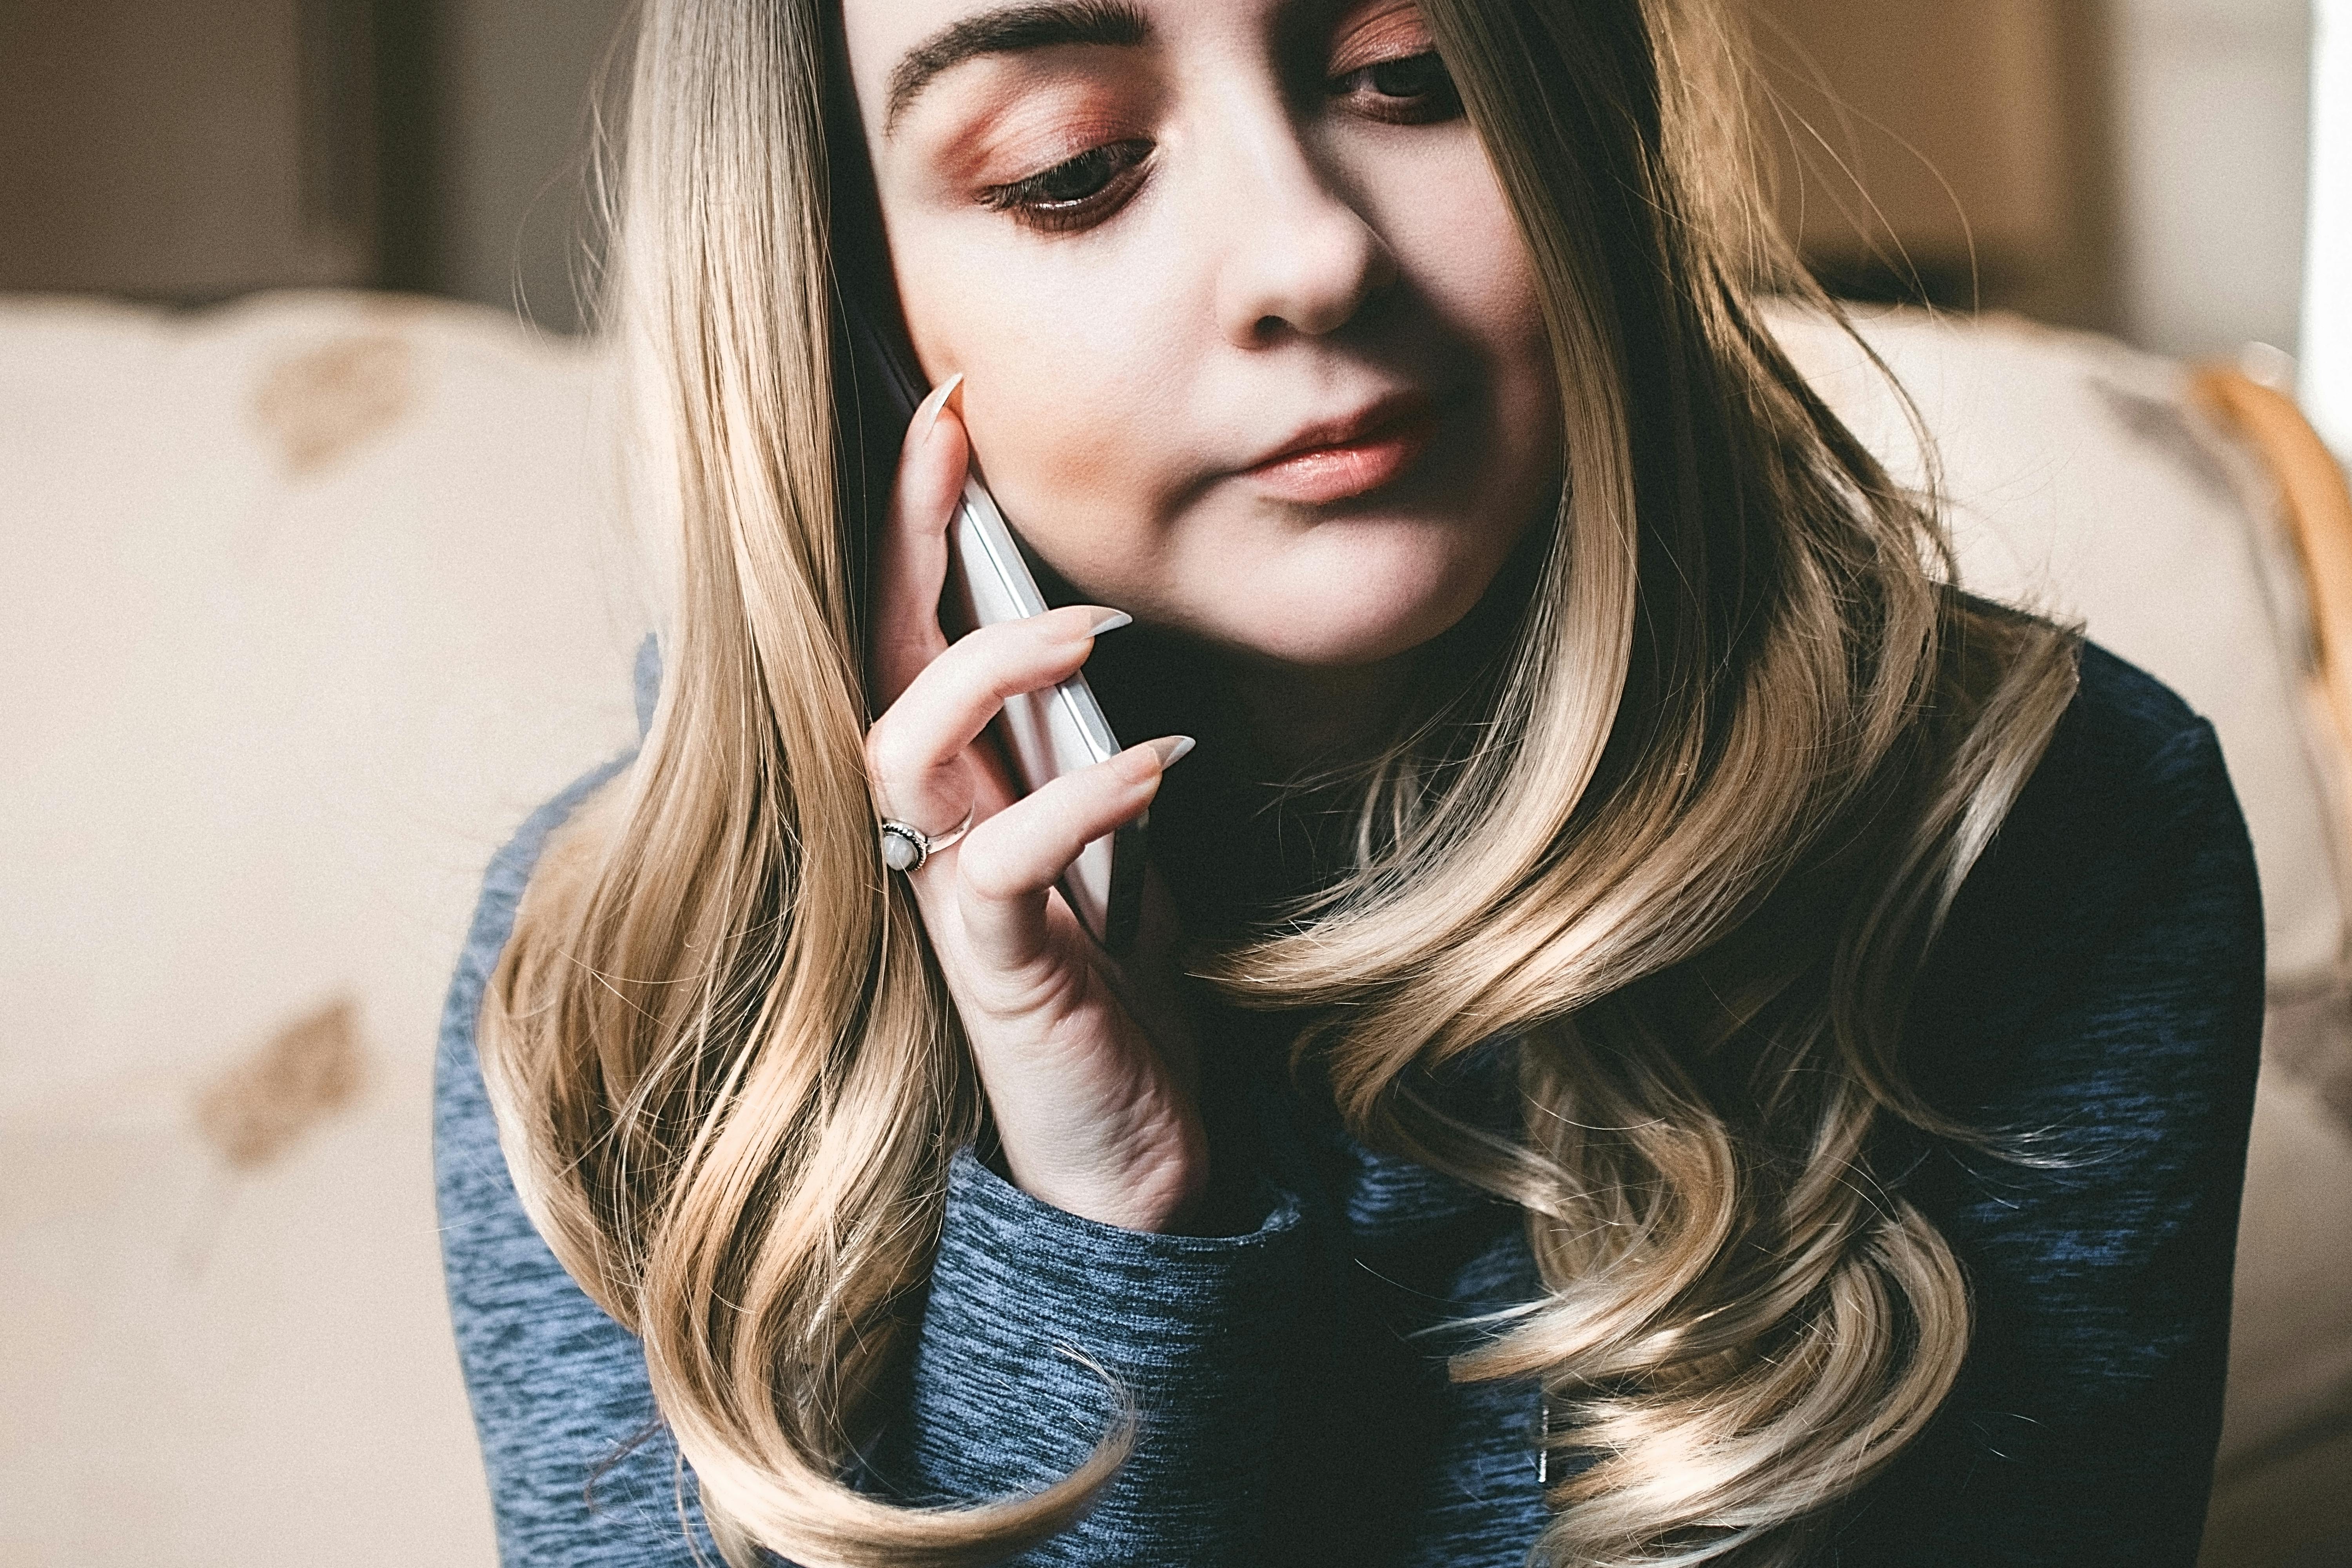 Teenage girl on the phone | Source: Pexels